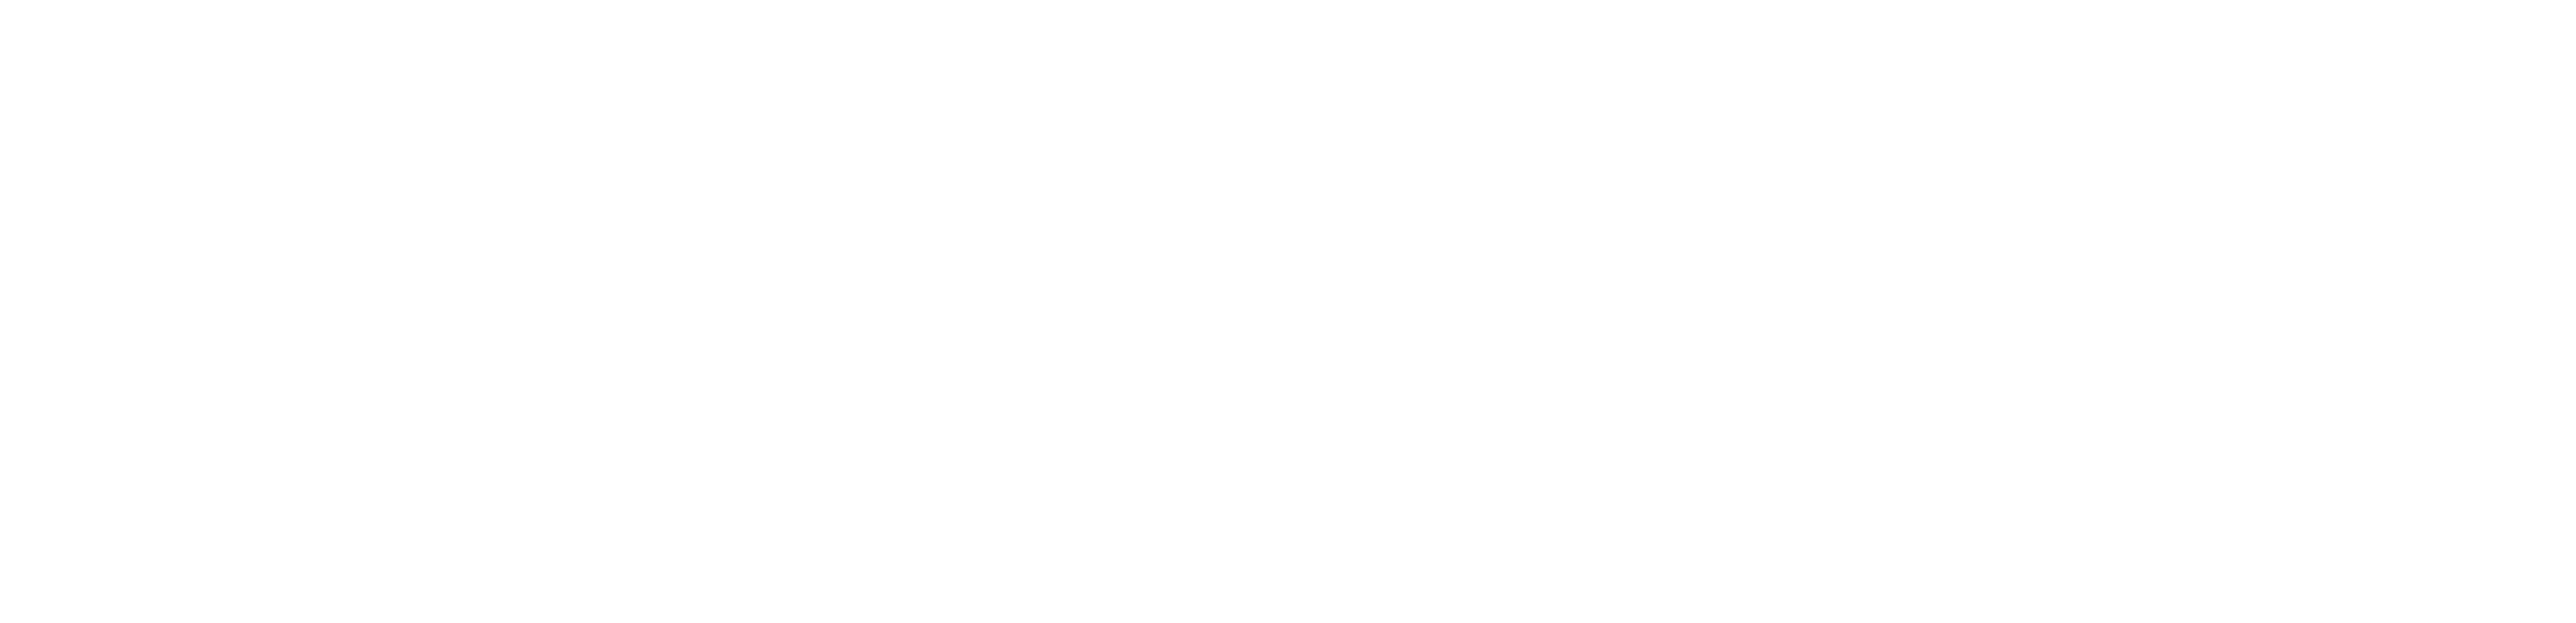 TRM Logo